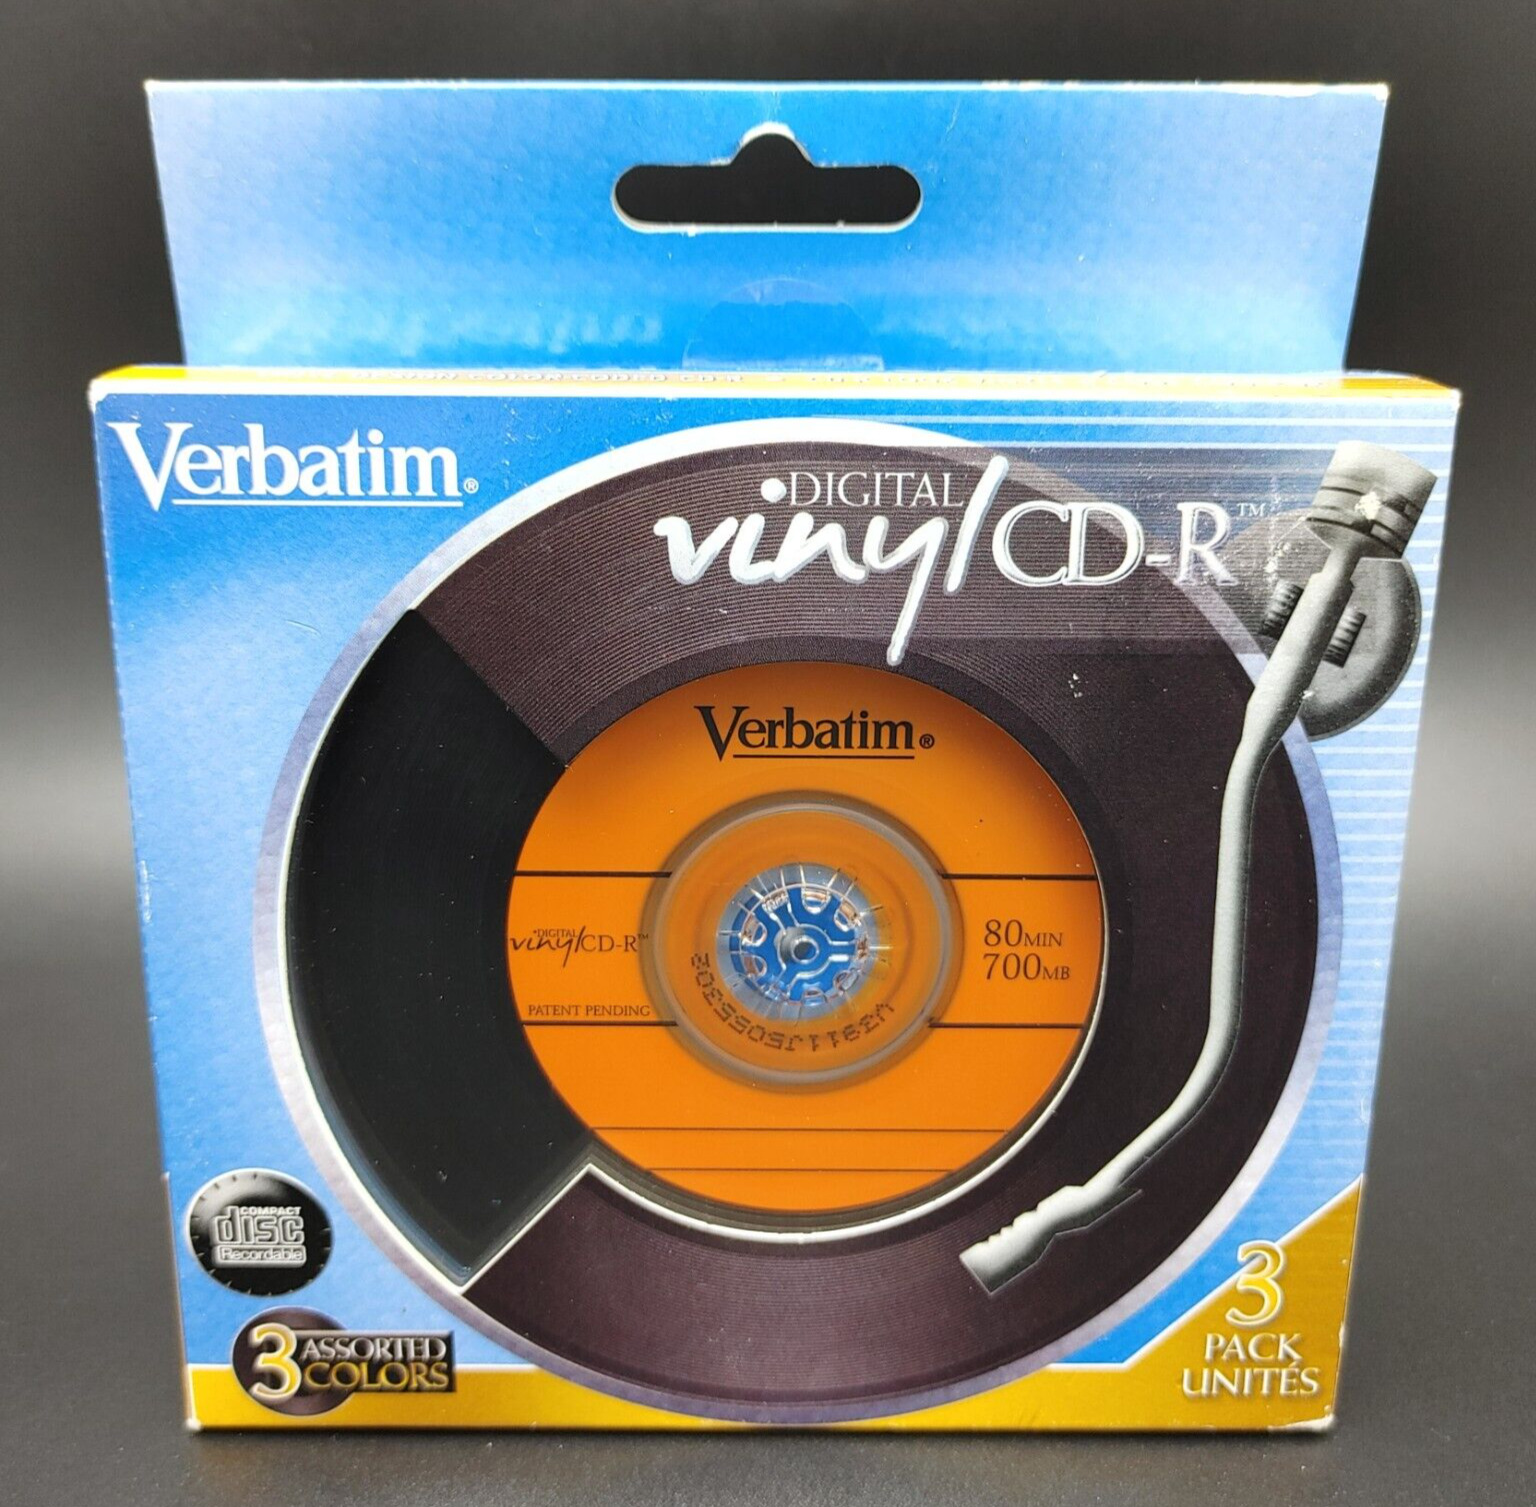 Verbatim Digital Vinyl CD-R  with Jewel Cases 3 Pack Assorted 80min 700mb #94479